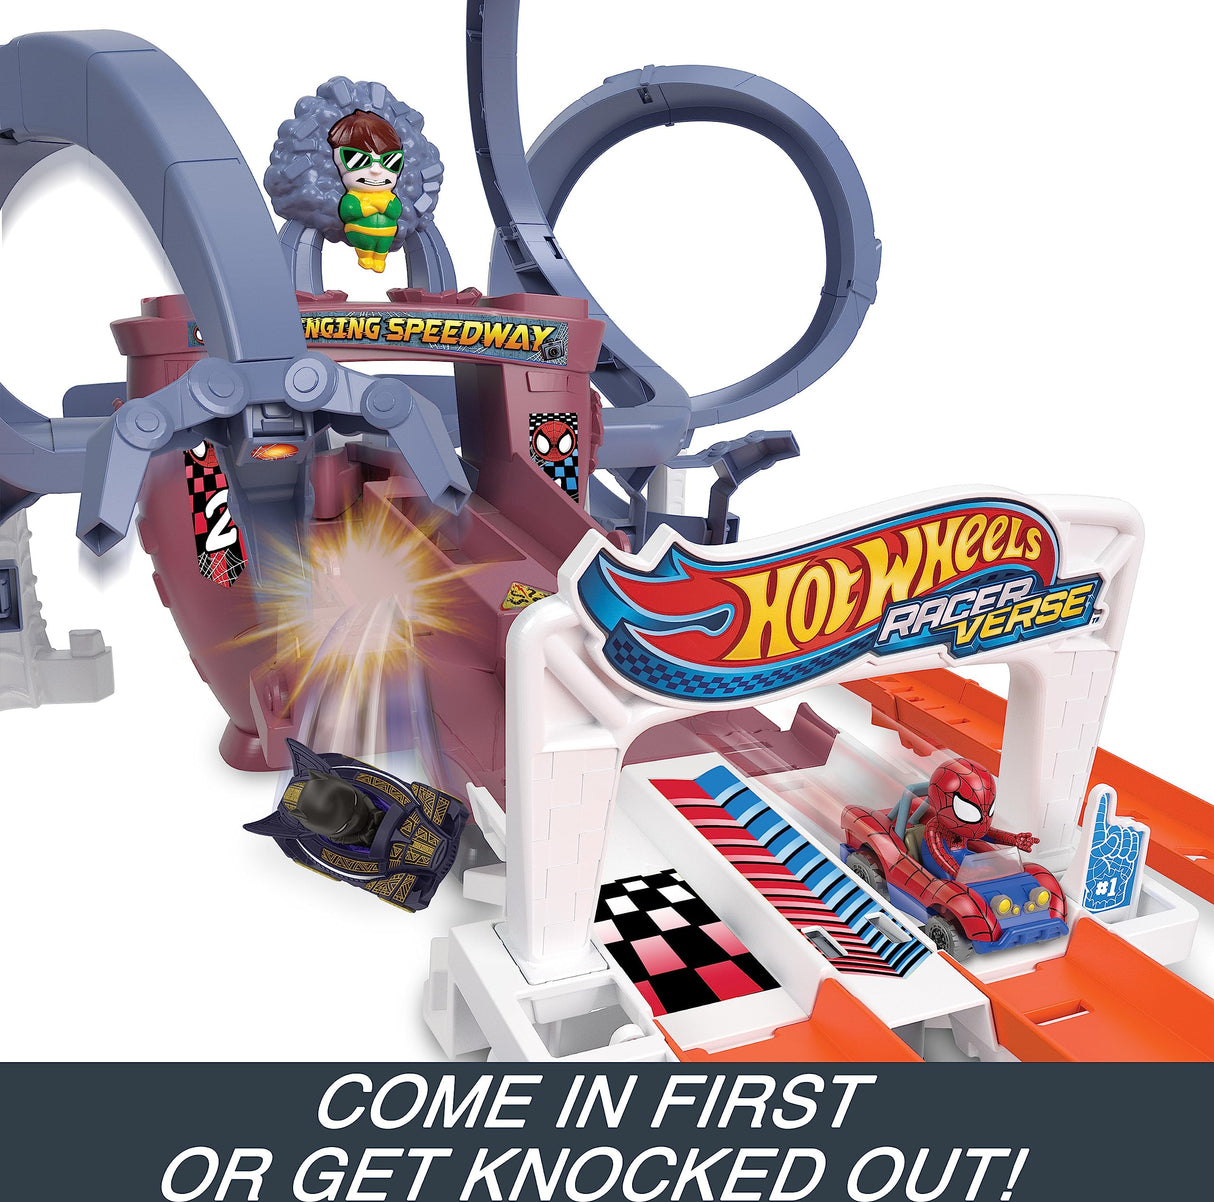 Hot Wheels RacerVerse Toy Car Track Set, Spider-Man’s Web-Slinging Speedway, 2 1:64 Scale Racers: Spider-Man & Black Panther